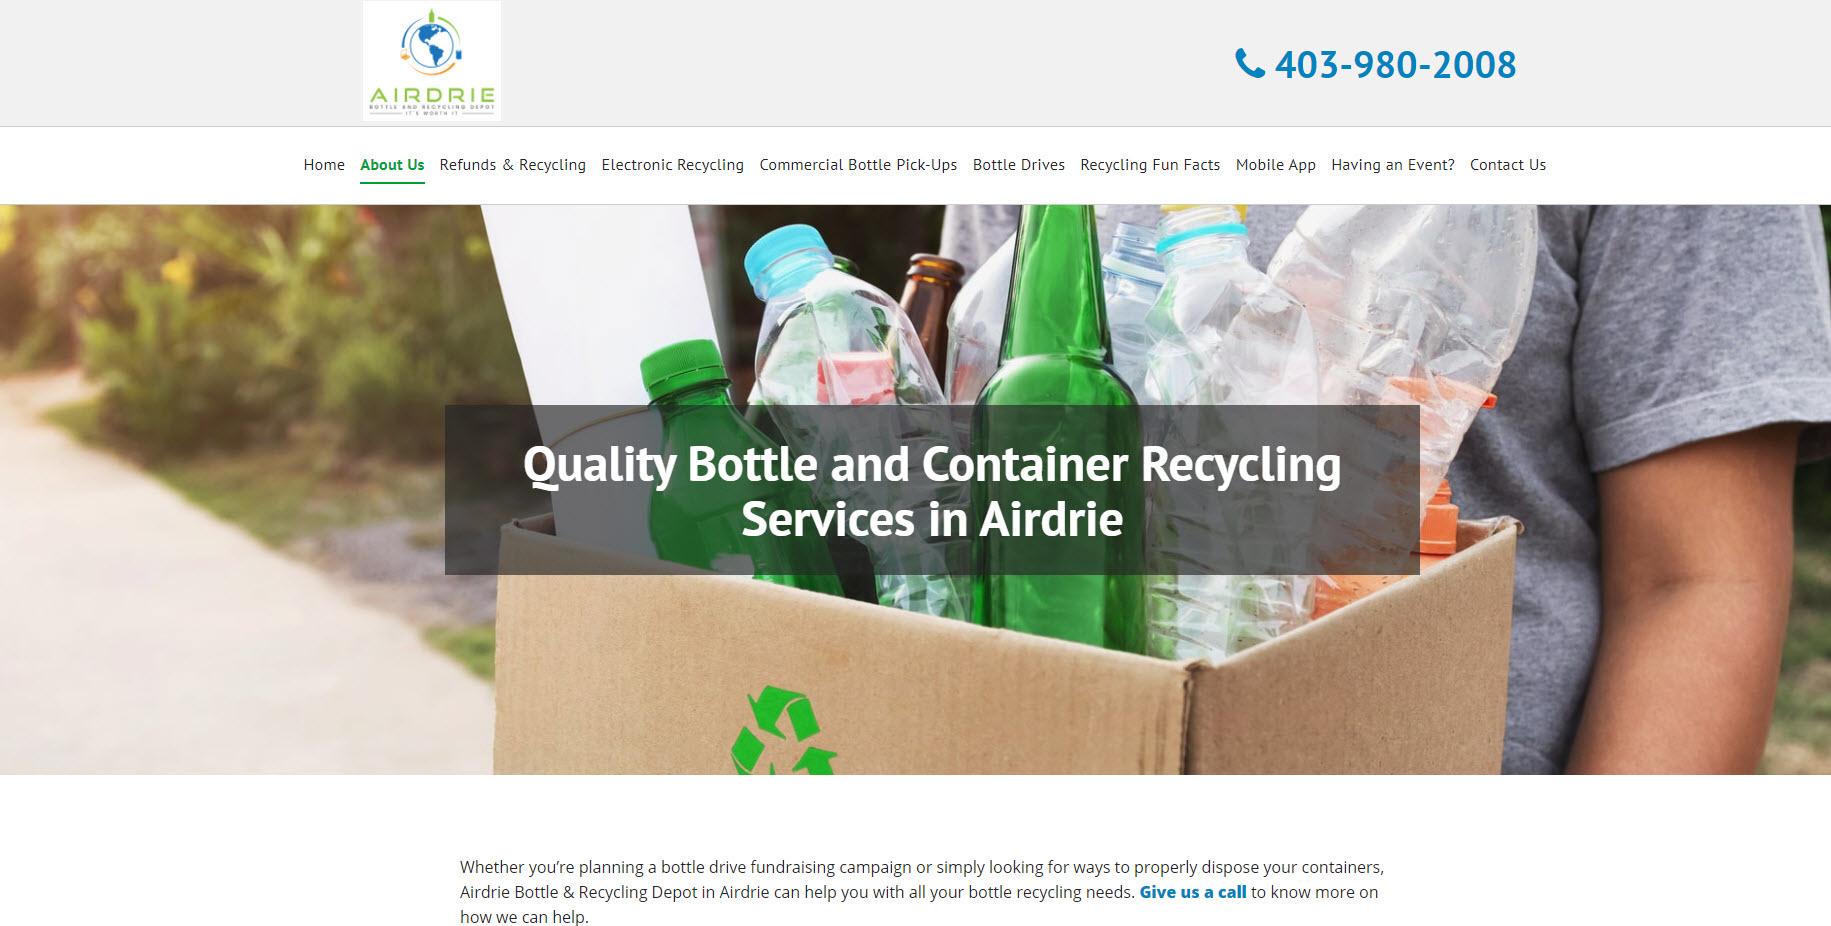 Hometown Bottle & Recycling Depot - Can & Bottle Return Depots